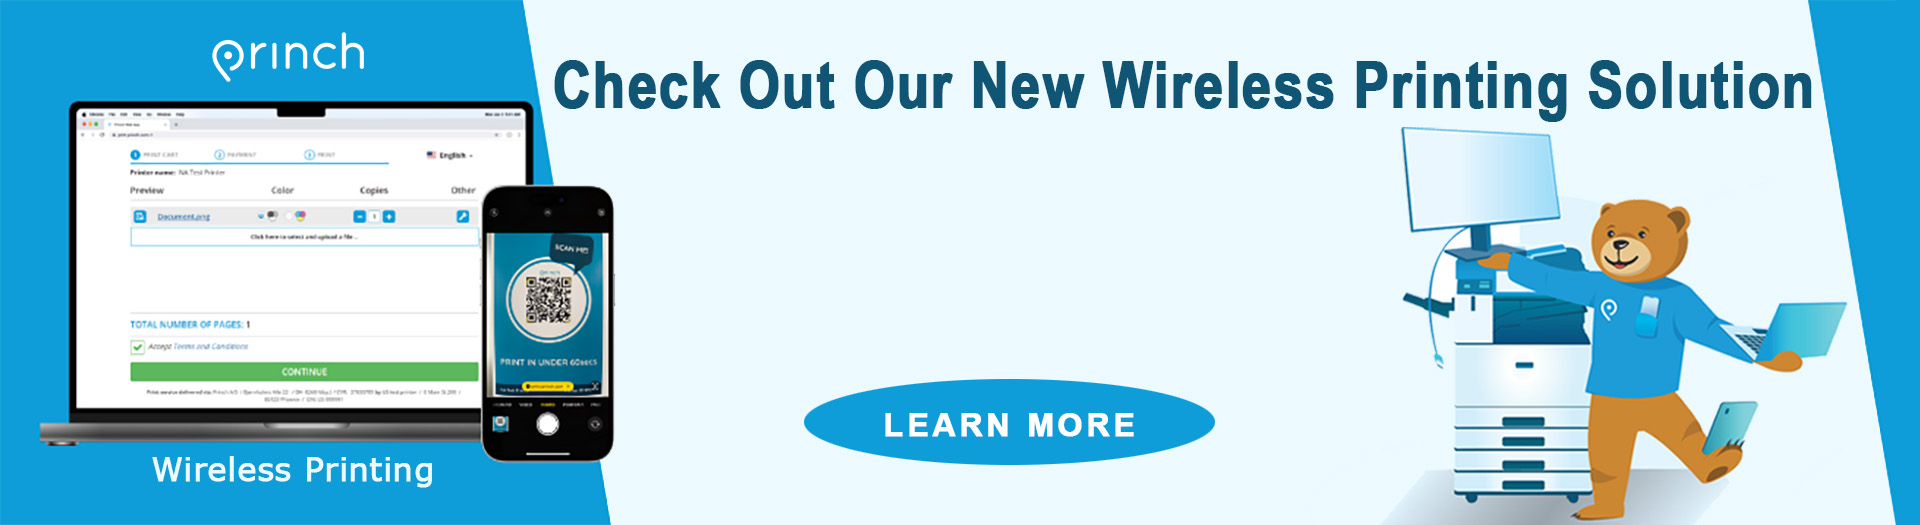 Princh Wireless Printing homepage banner